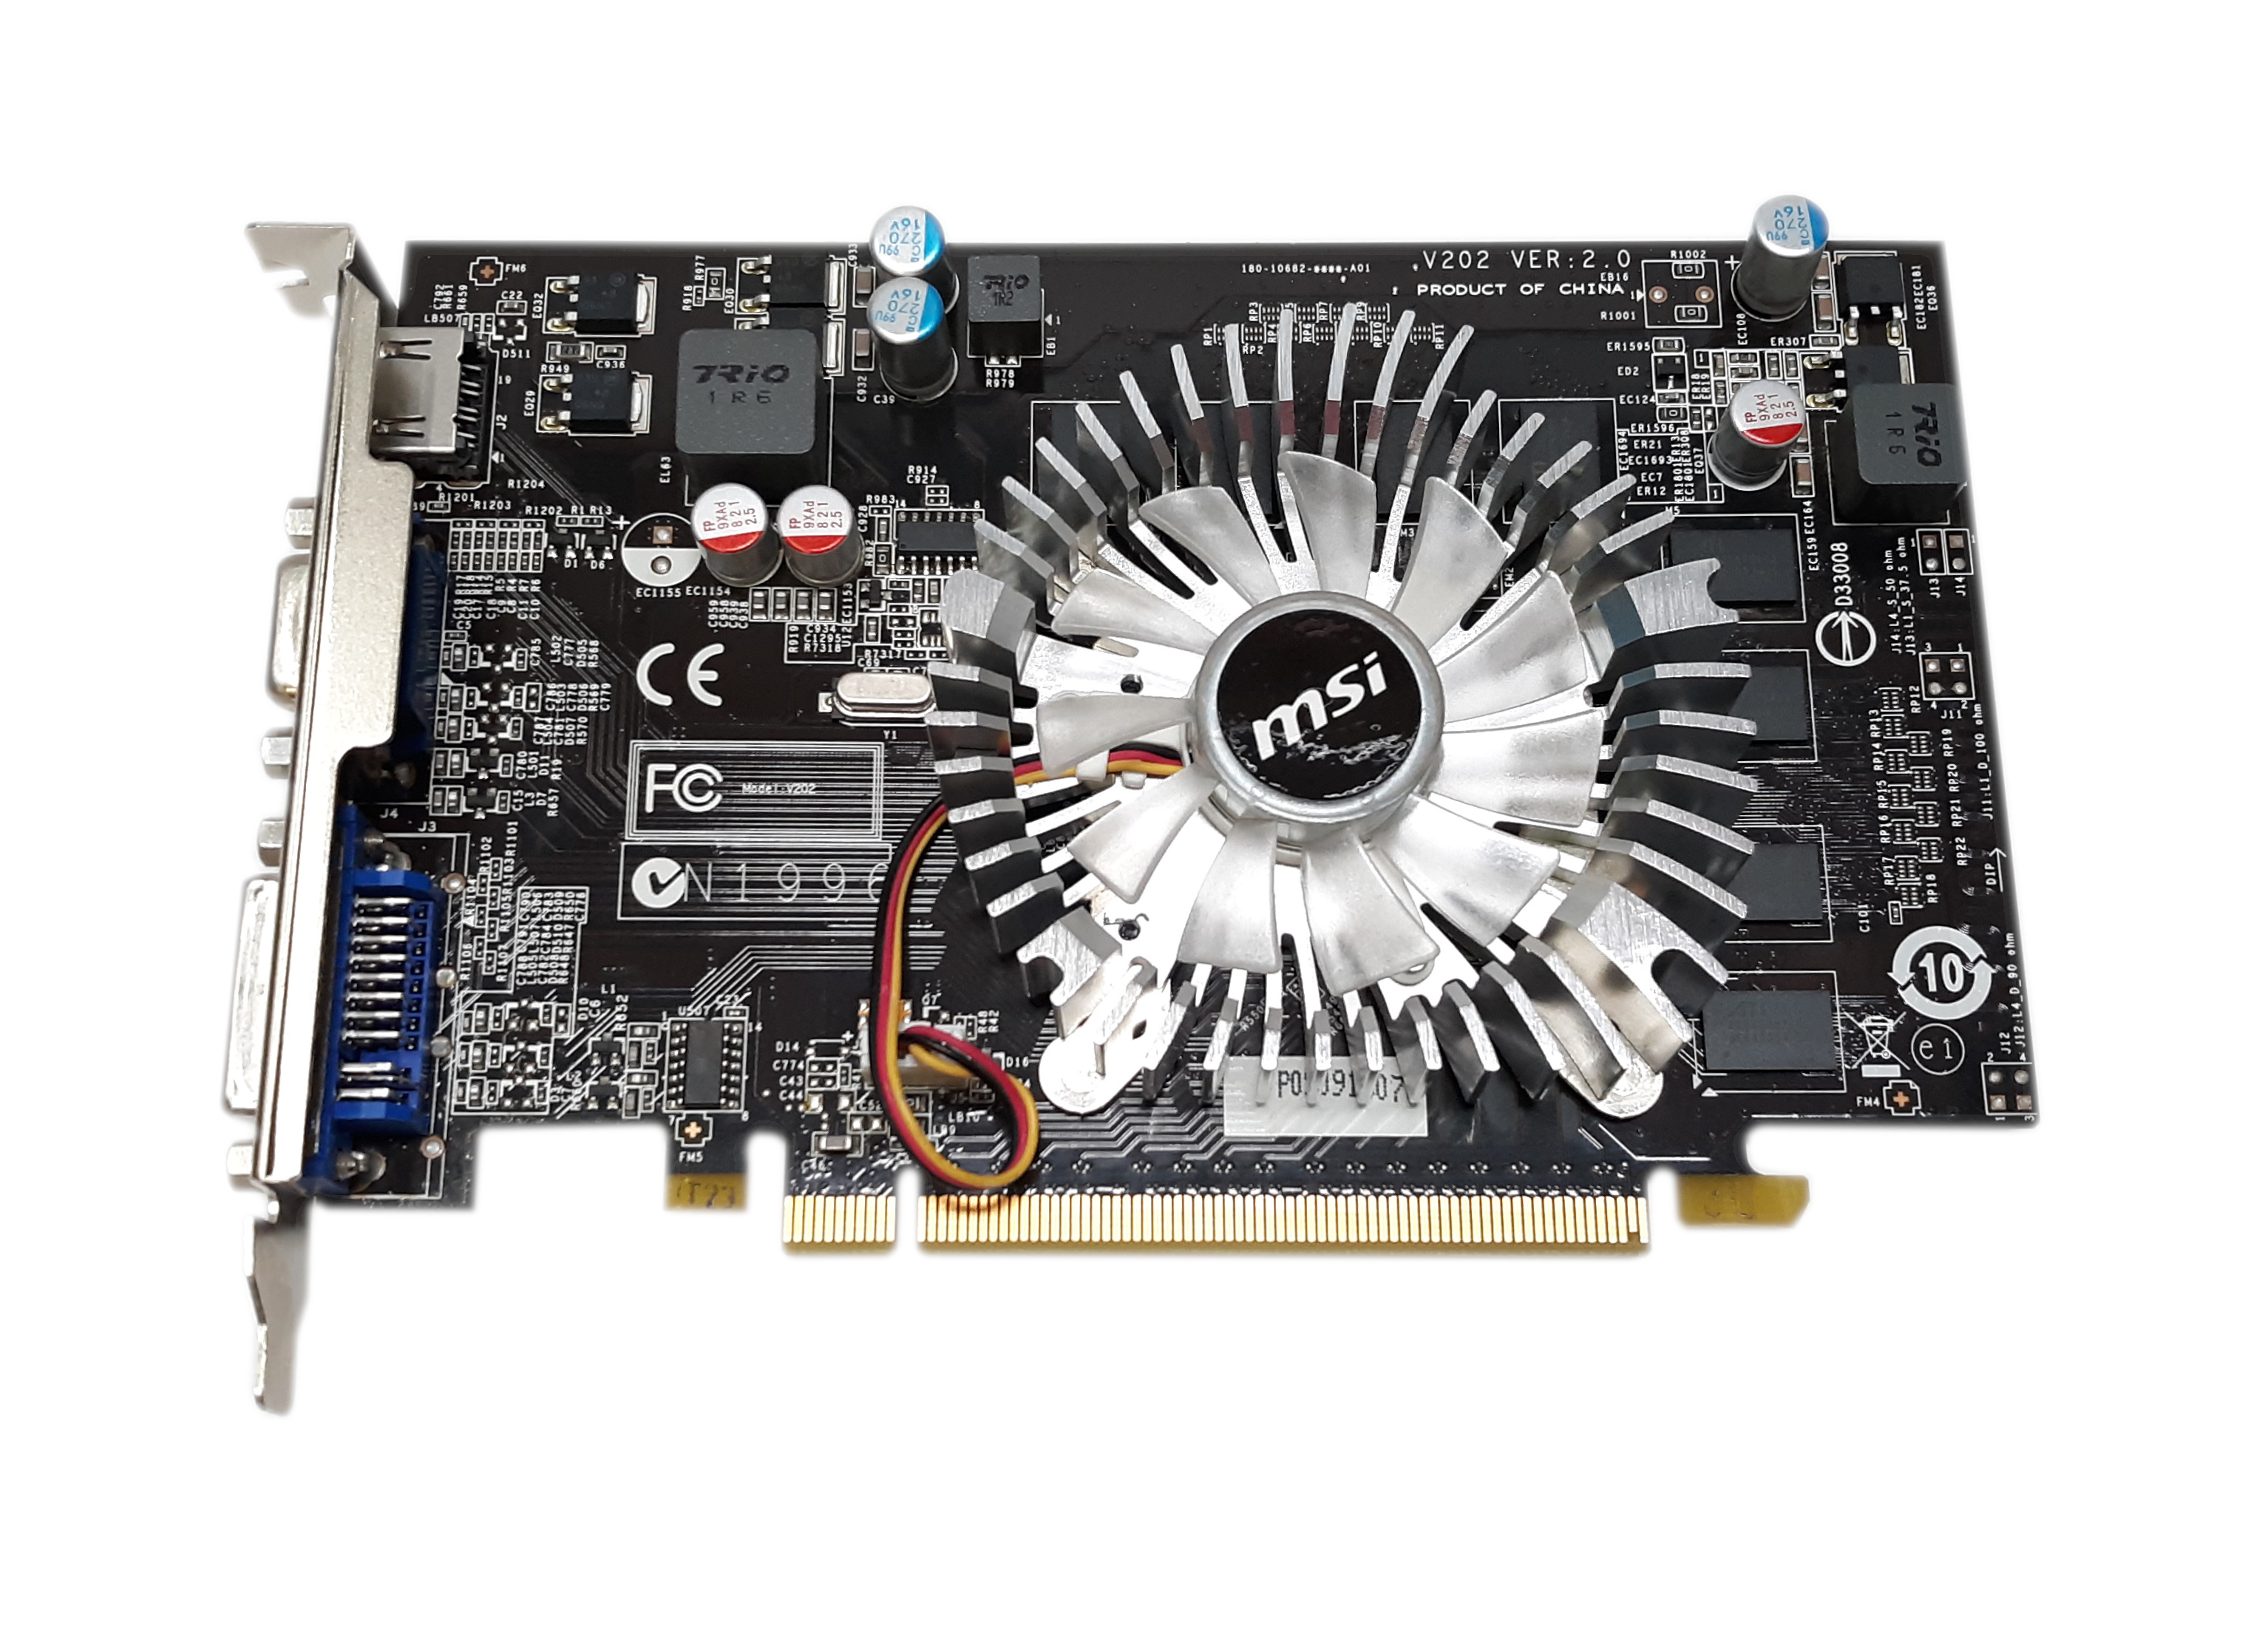 MSI NVidia GeForce GT 220 1 GB DDR2 PCIe x16 VGA/DVI/HDMI N220GT-MD1G - Click Image to Close